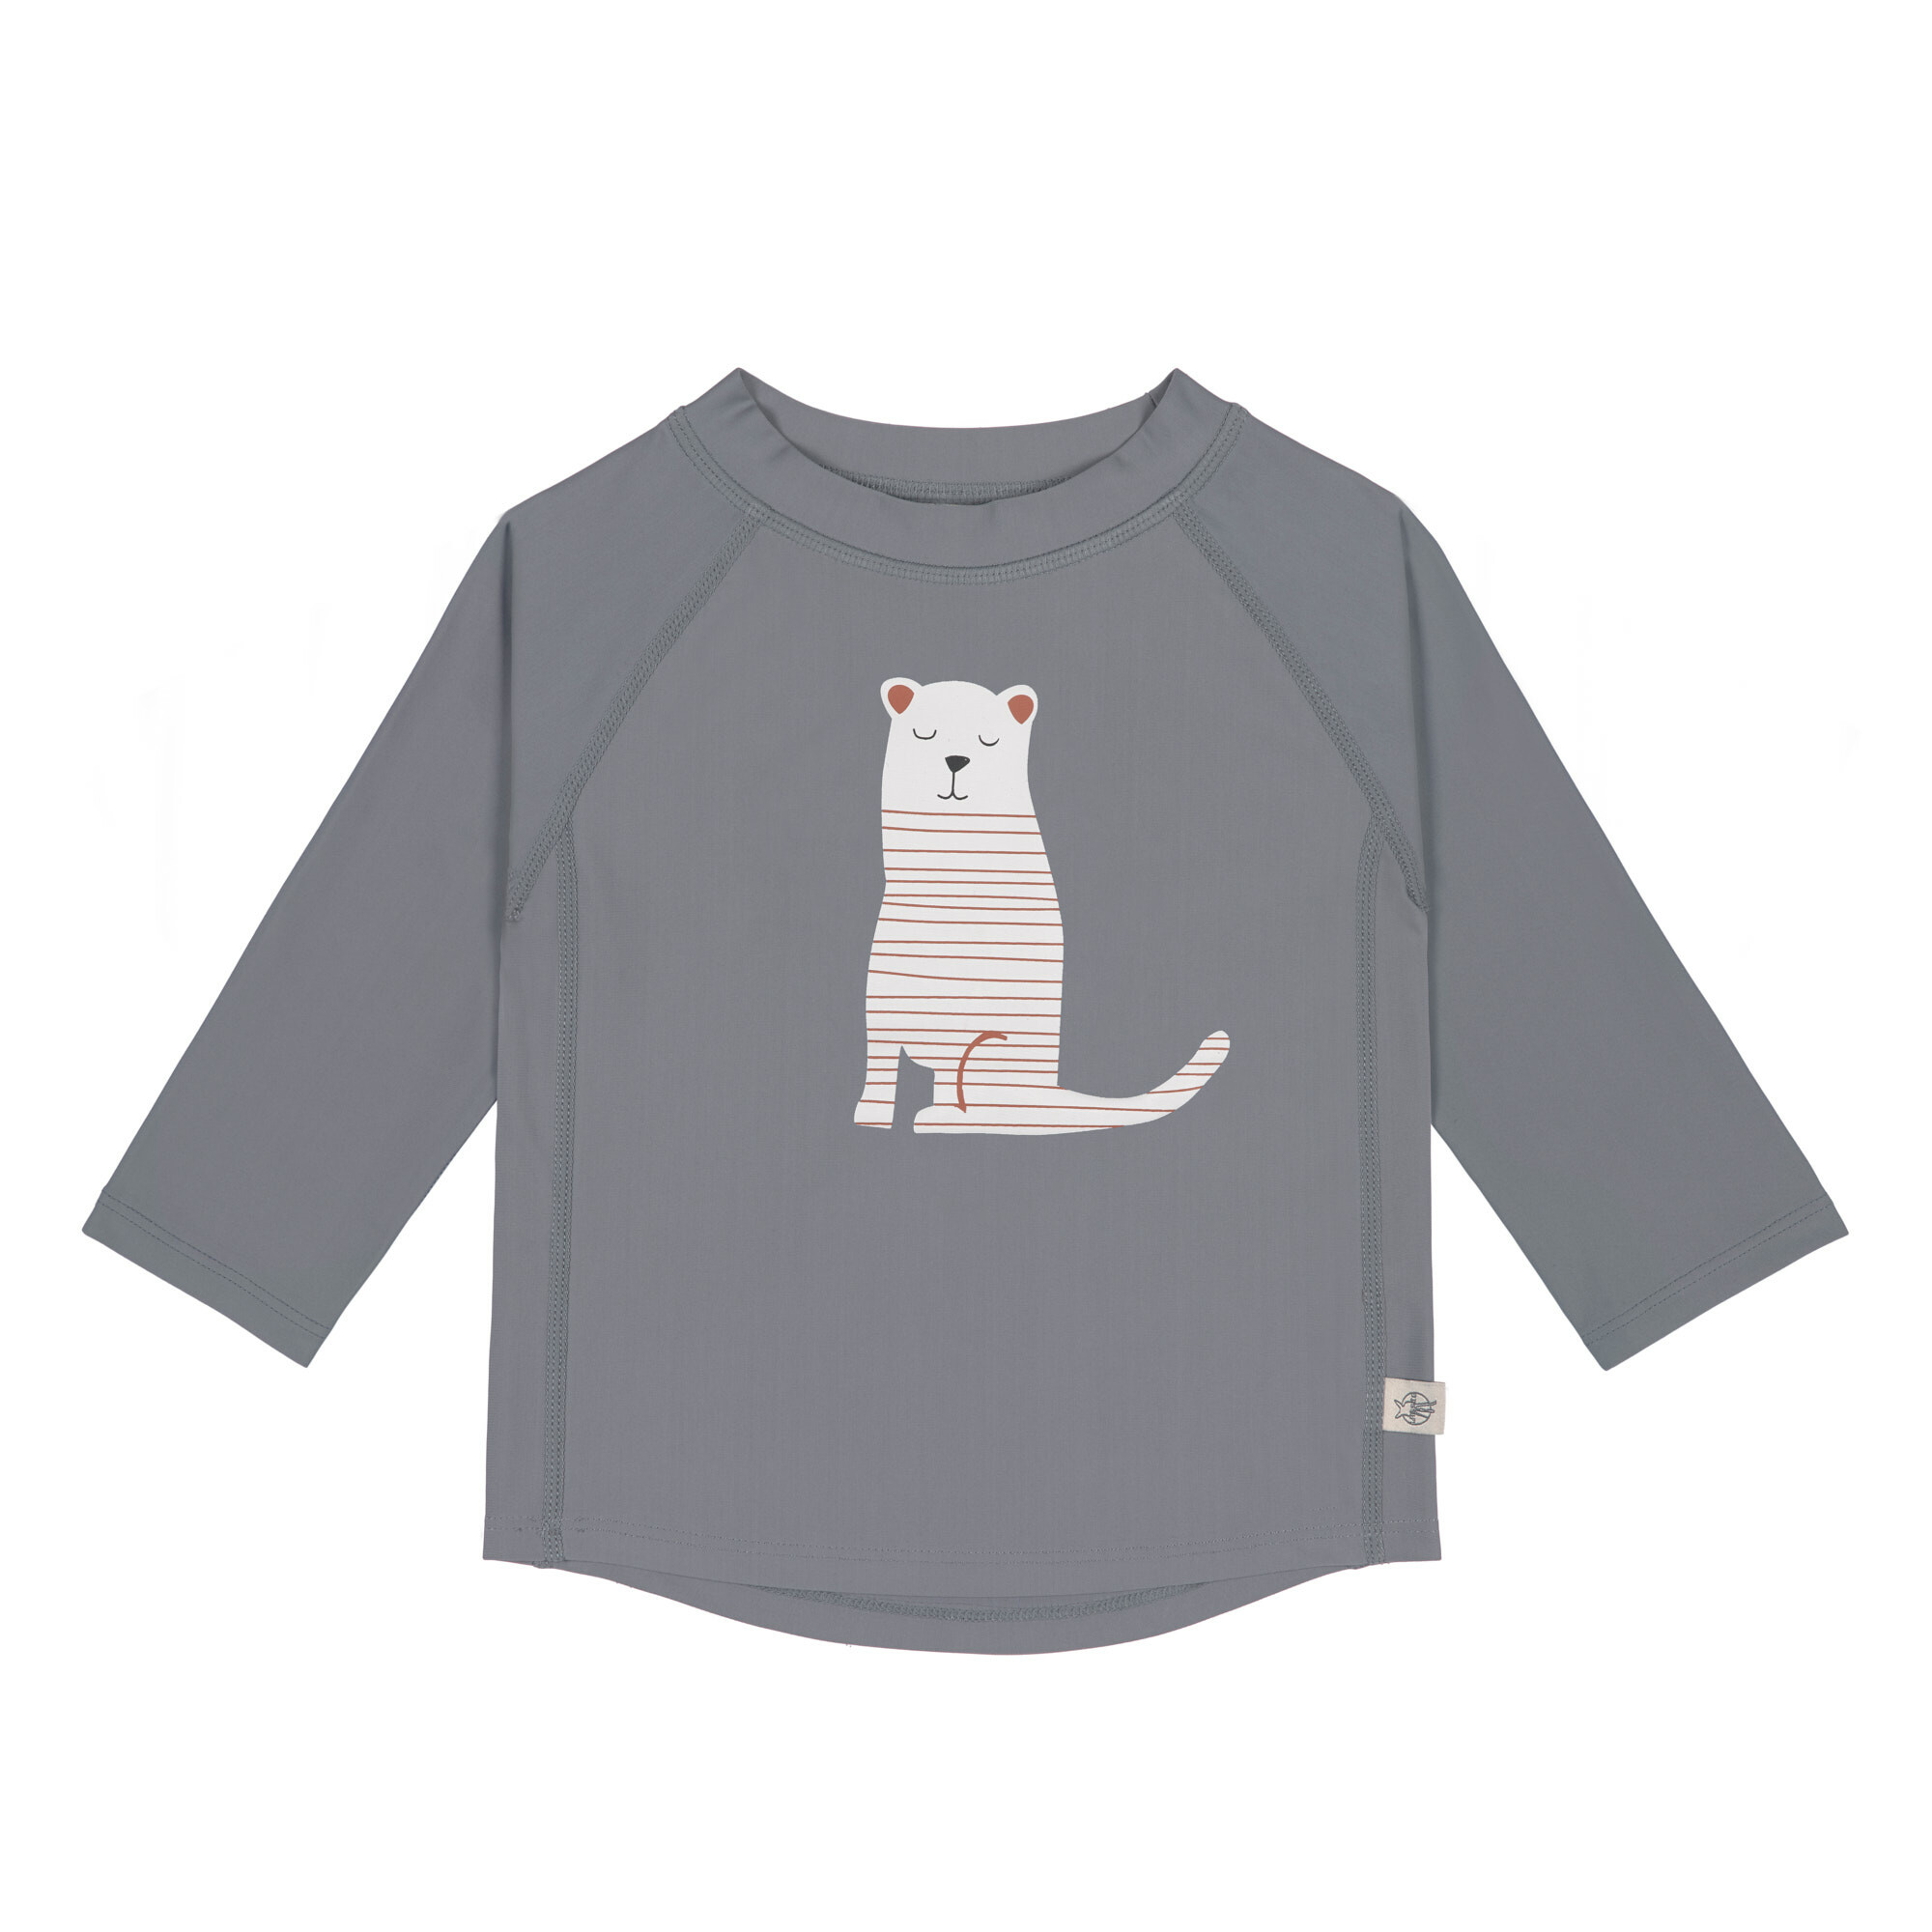 Lässig - UV rashguard with long sleeves for kids - Tiger - grey